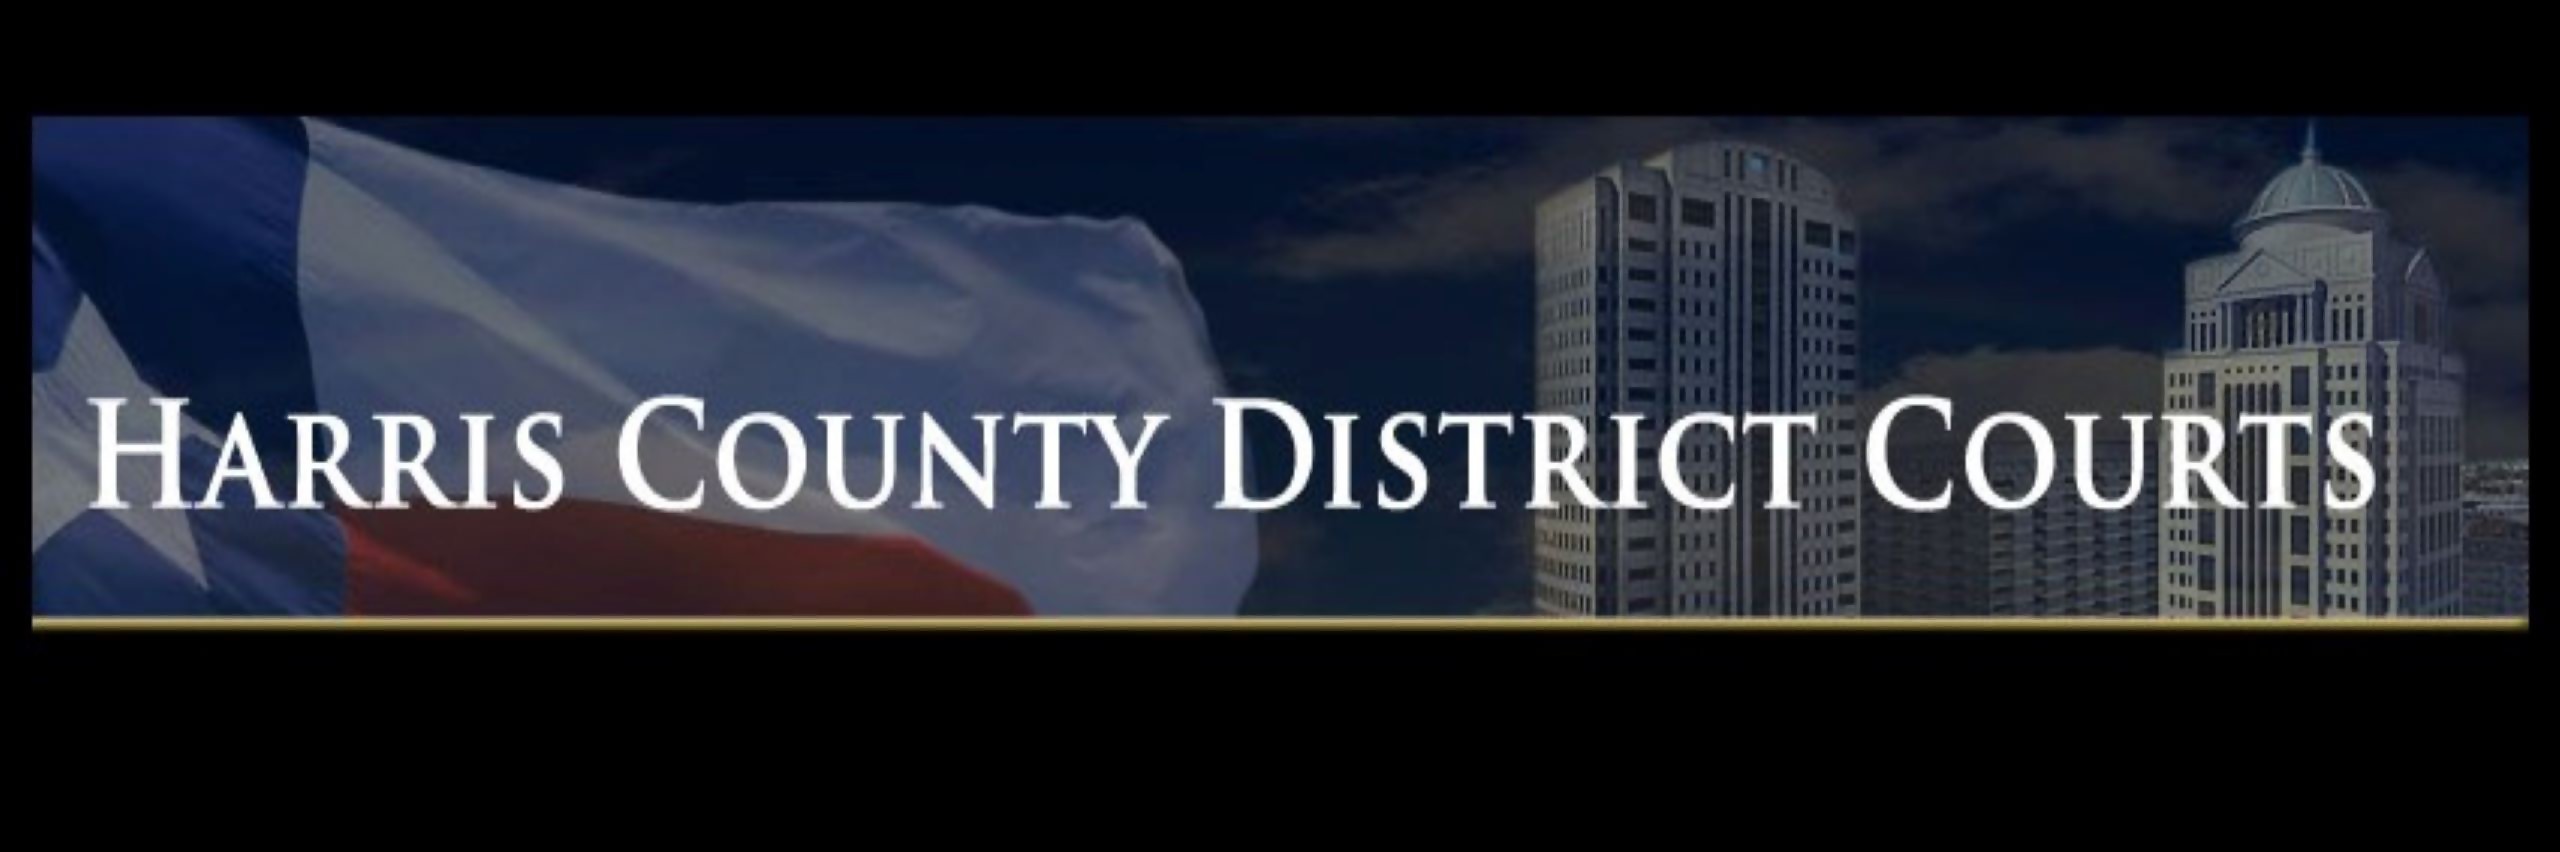 310th District Court - Live Stream